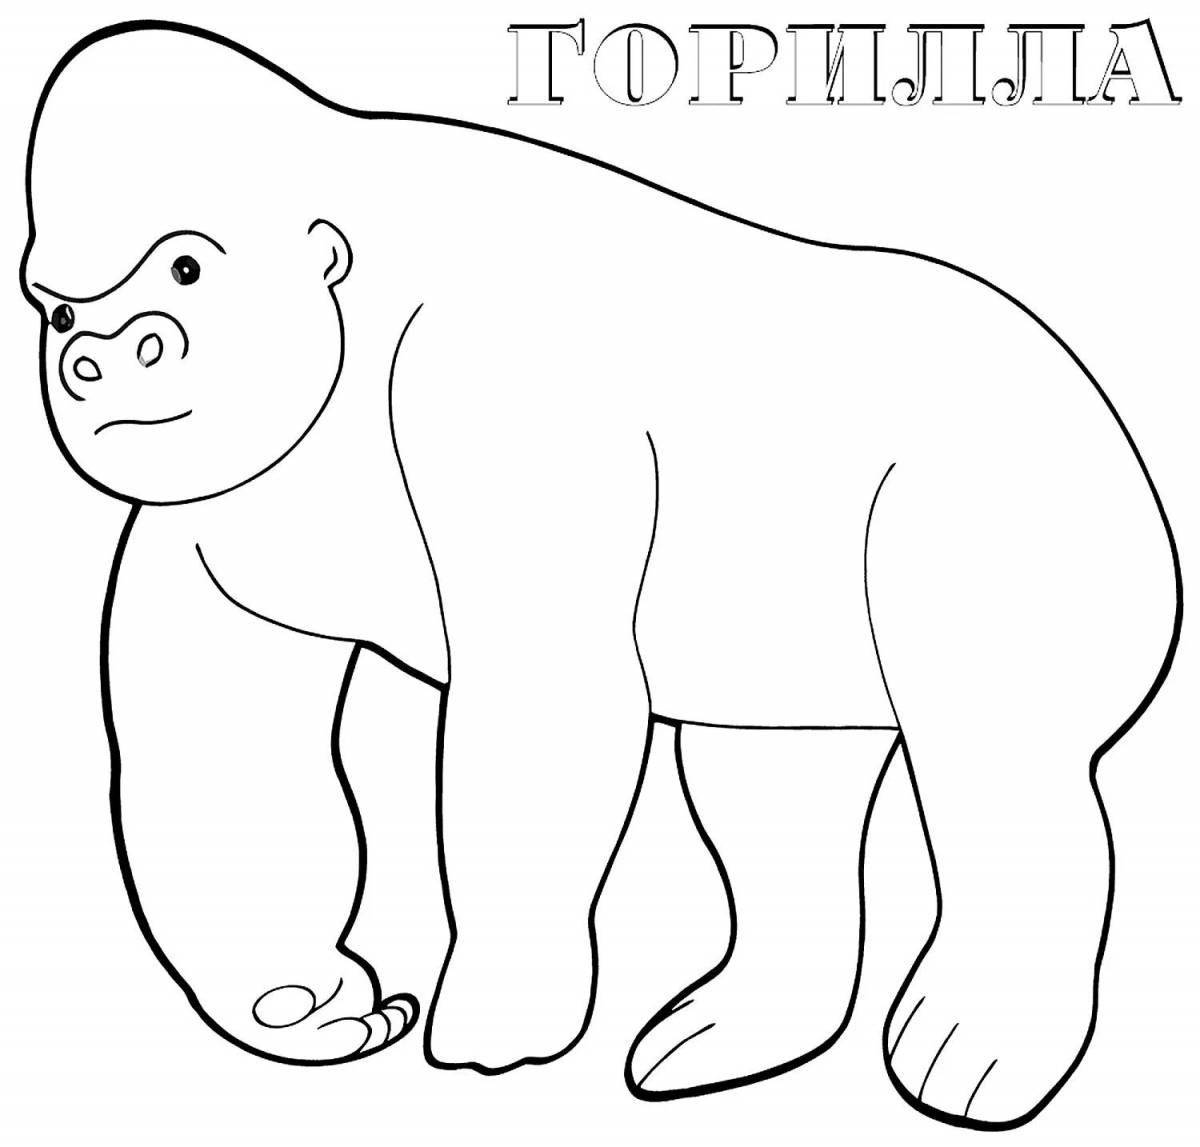 Fun gorilla coloring book for kids